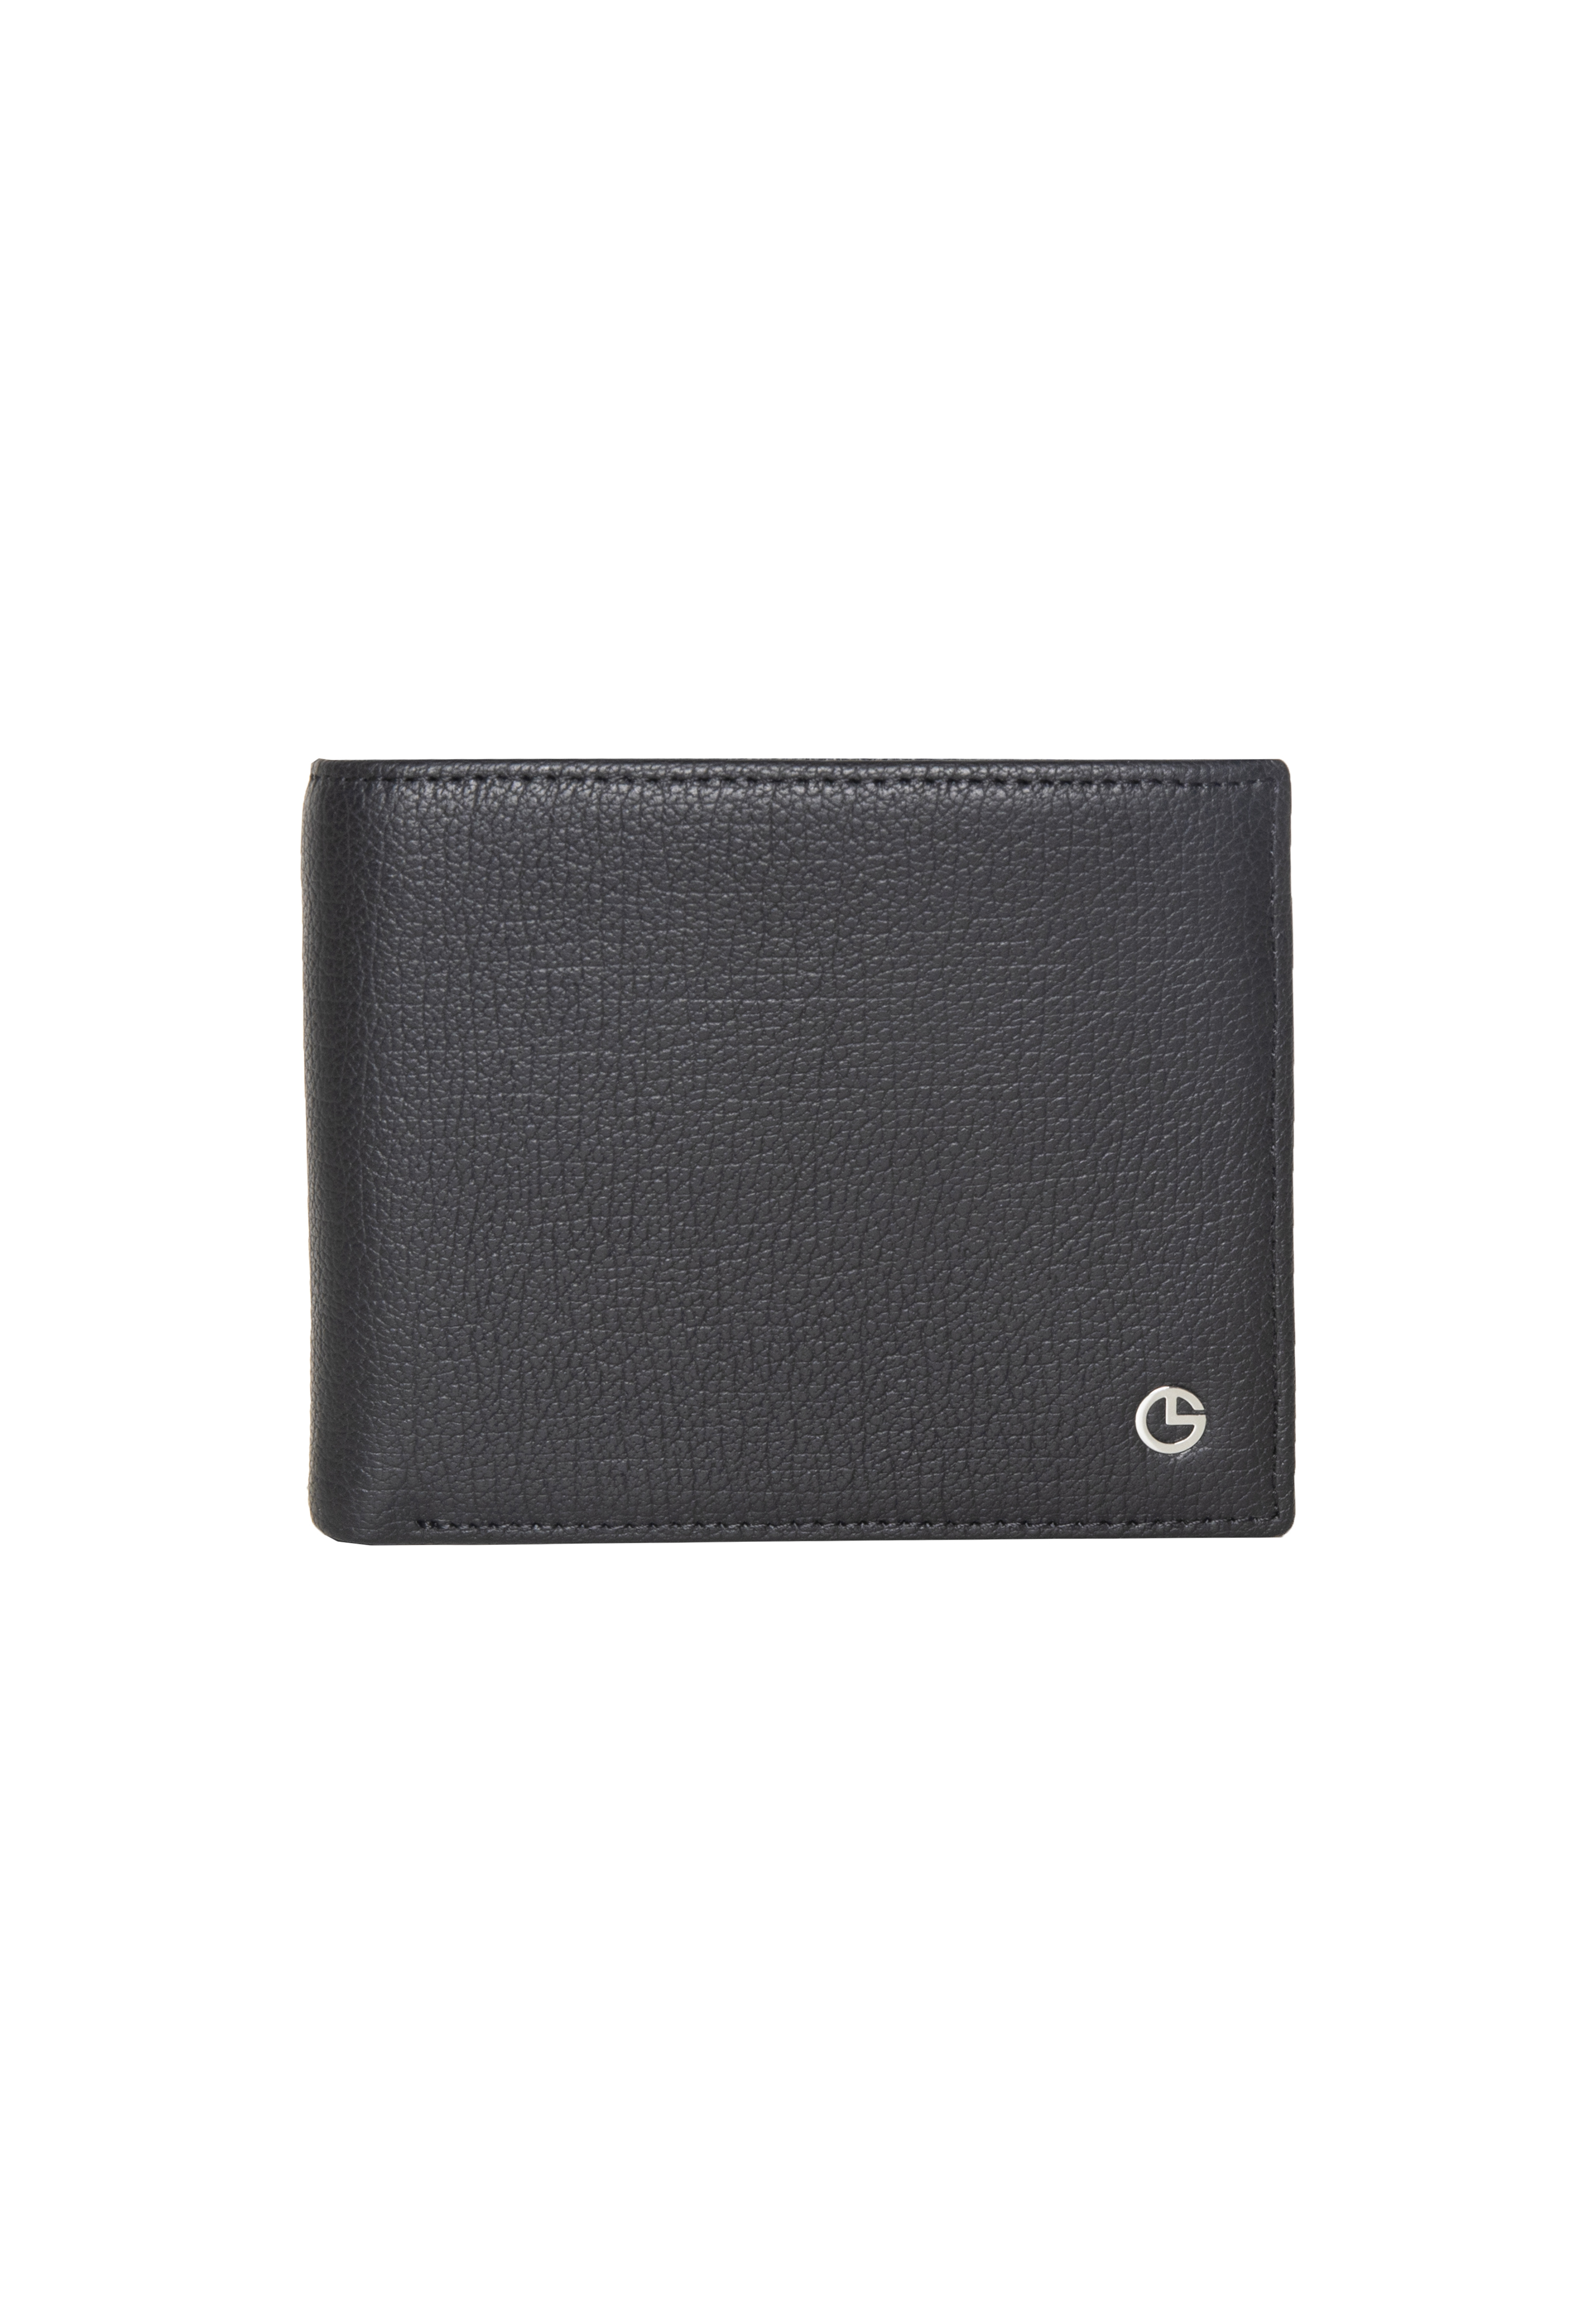 [Online Exclusive] Goldlion Genuine Leather Wallet (12 Cards Slot, 2 Window Compartment, Center Flap)